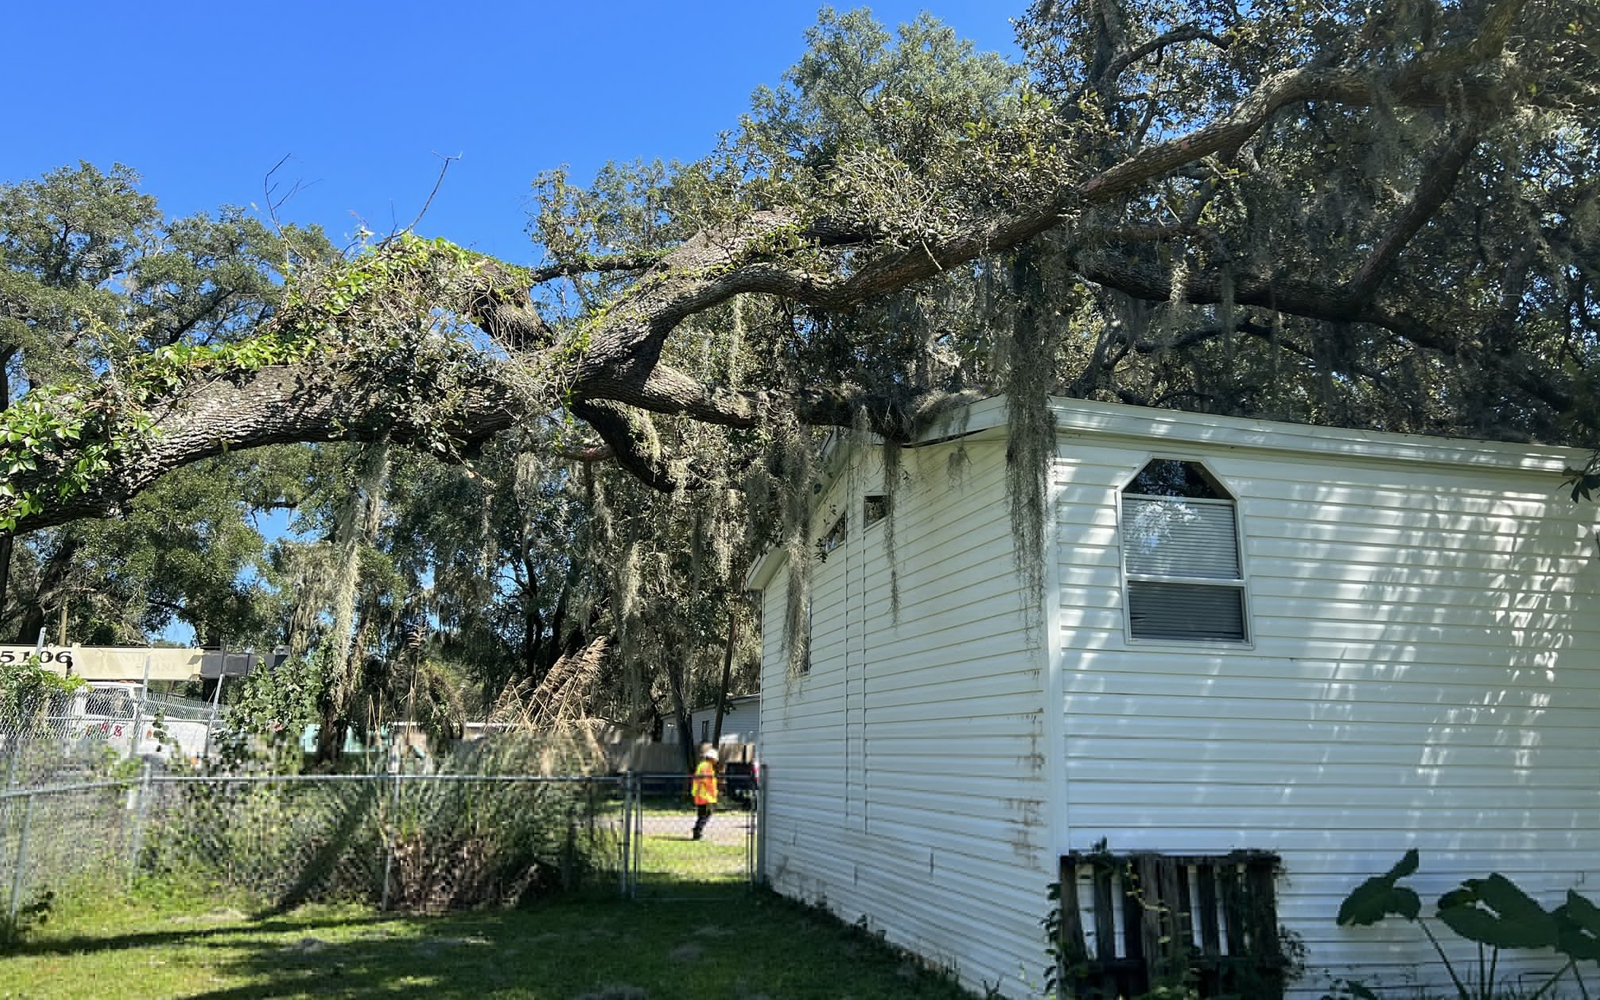 Hazard Tree Removal